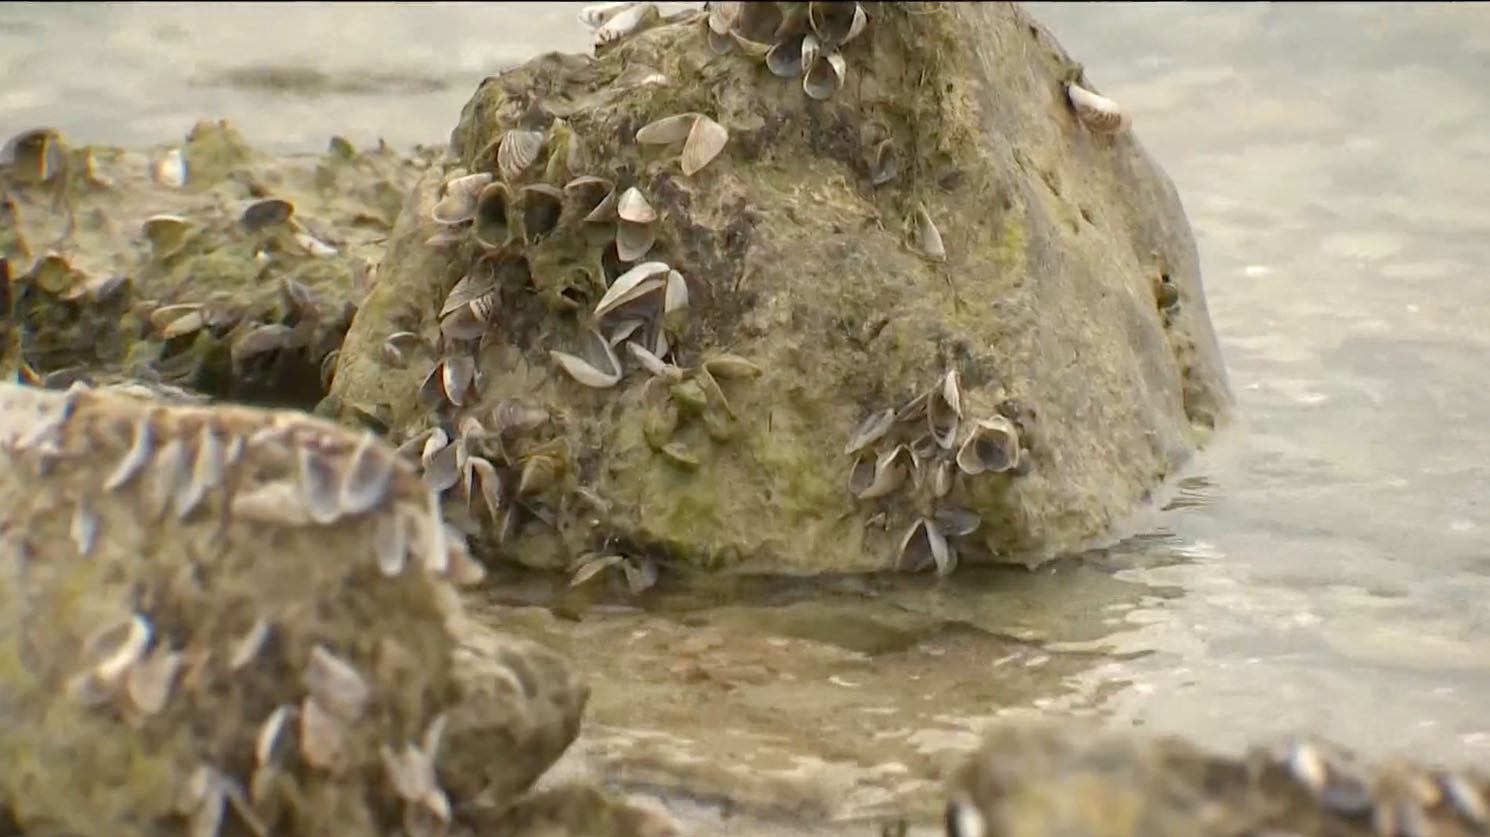 zebra mussels in lake travis. abc news